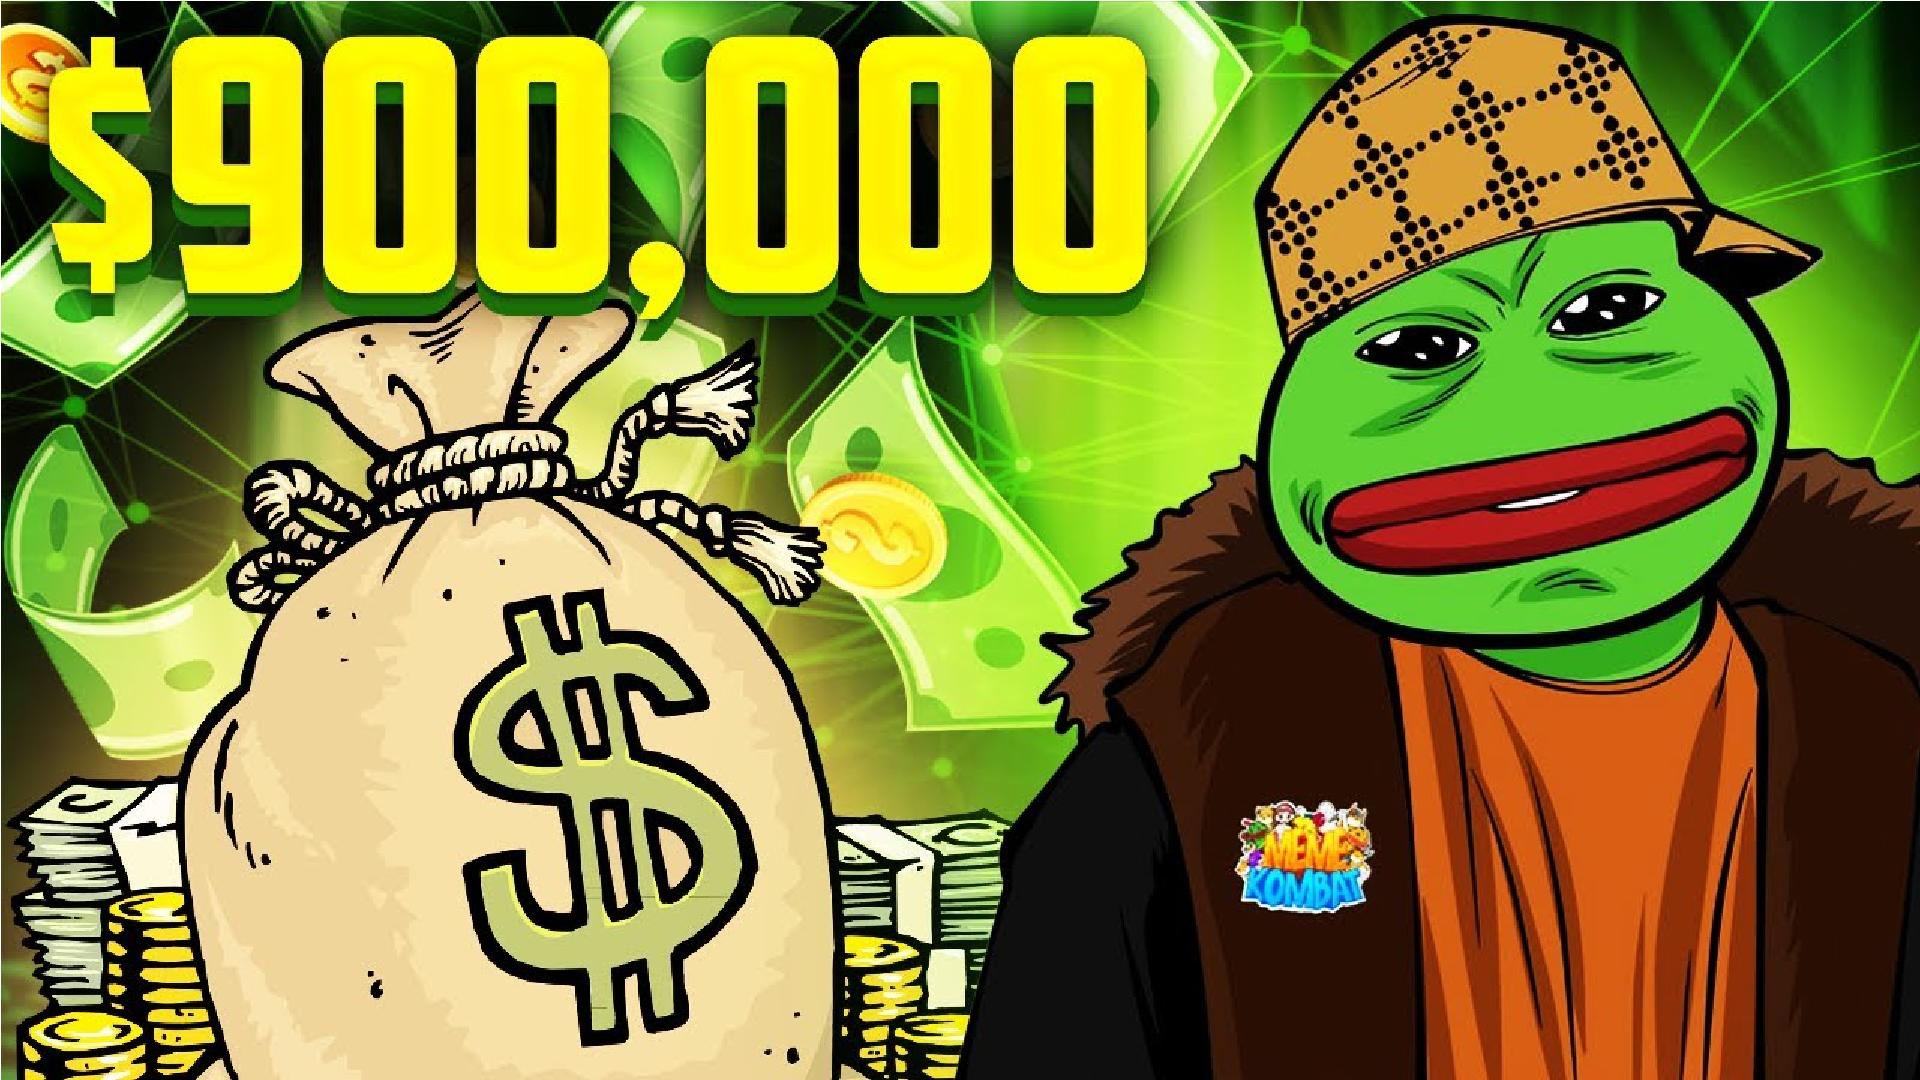 Meme Coins and Gaming Tokens Surge, But Investors Tip Meme Kombat Could 20x